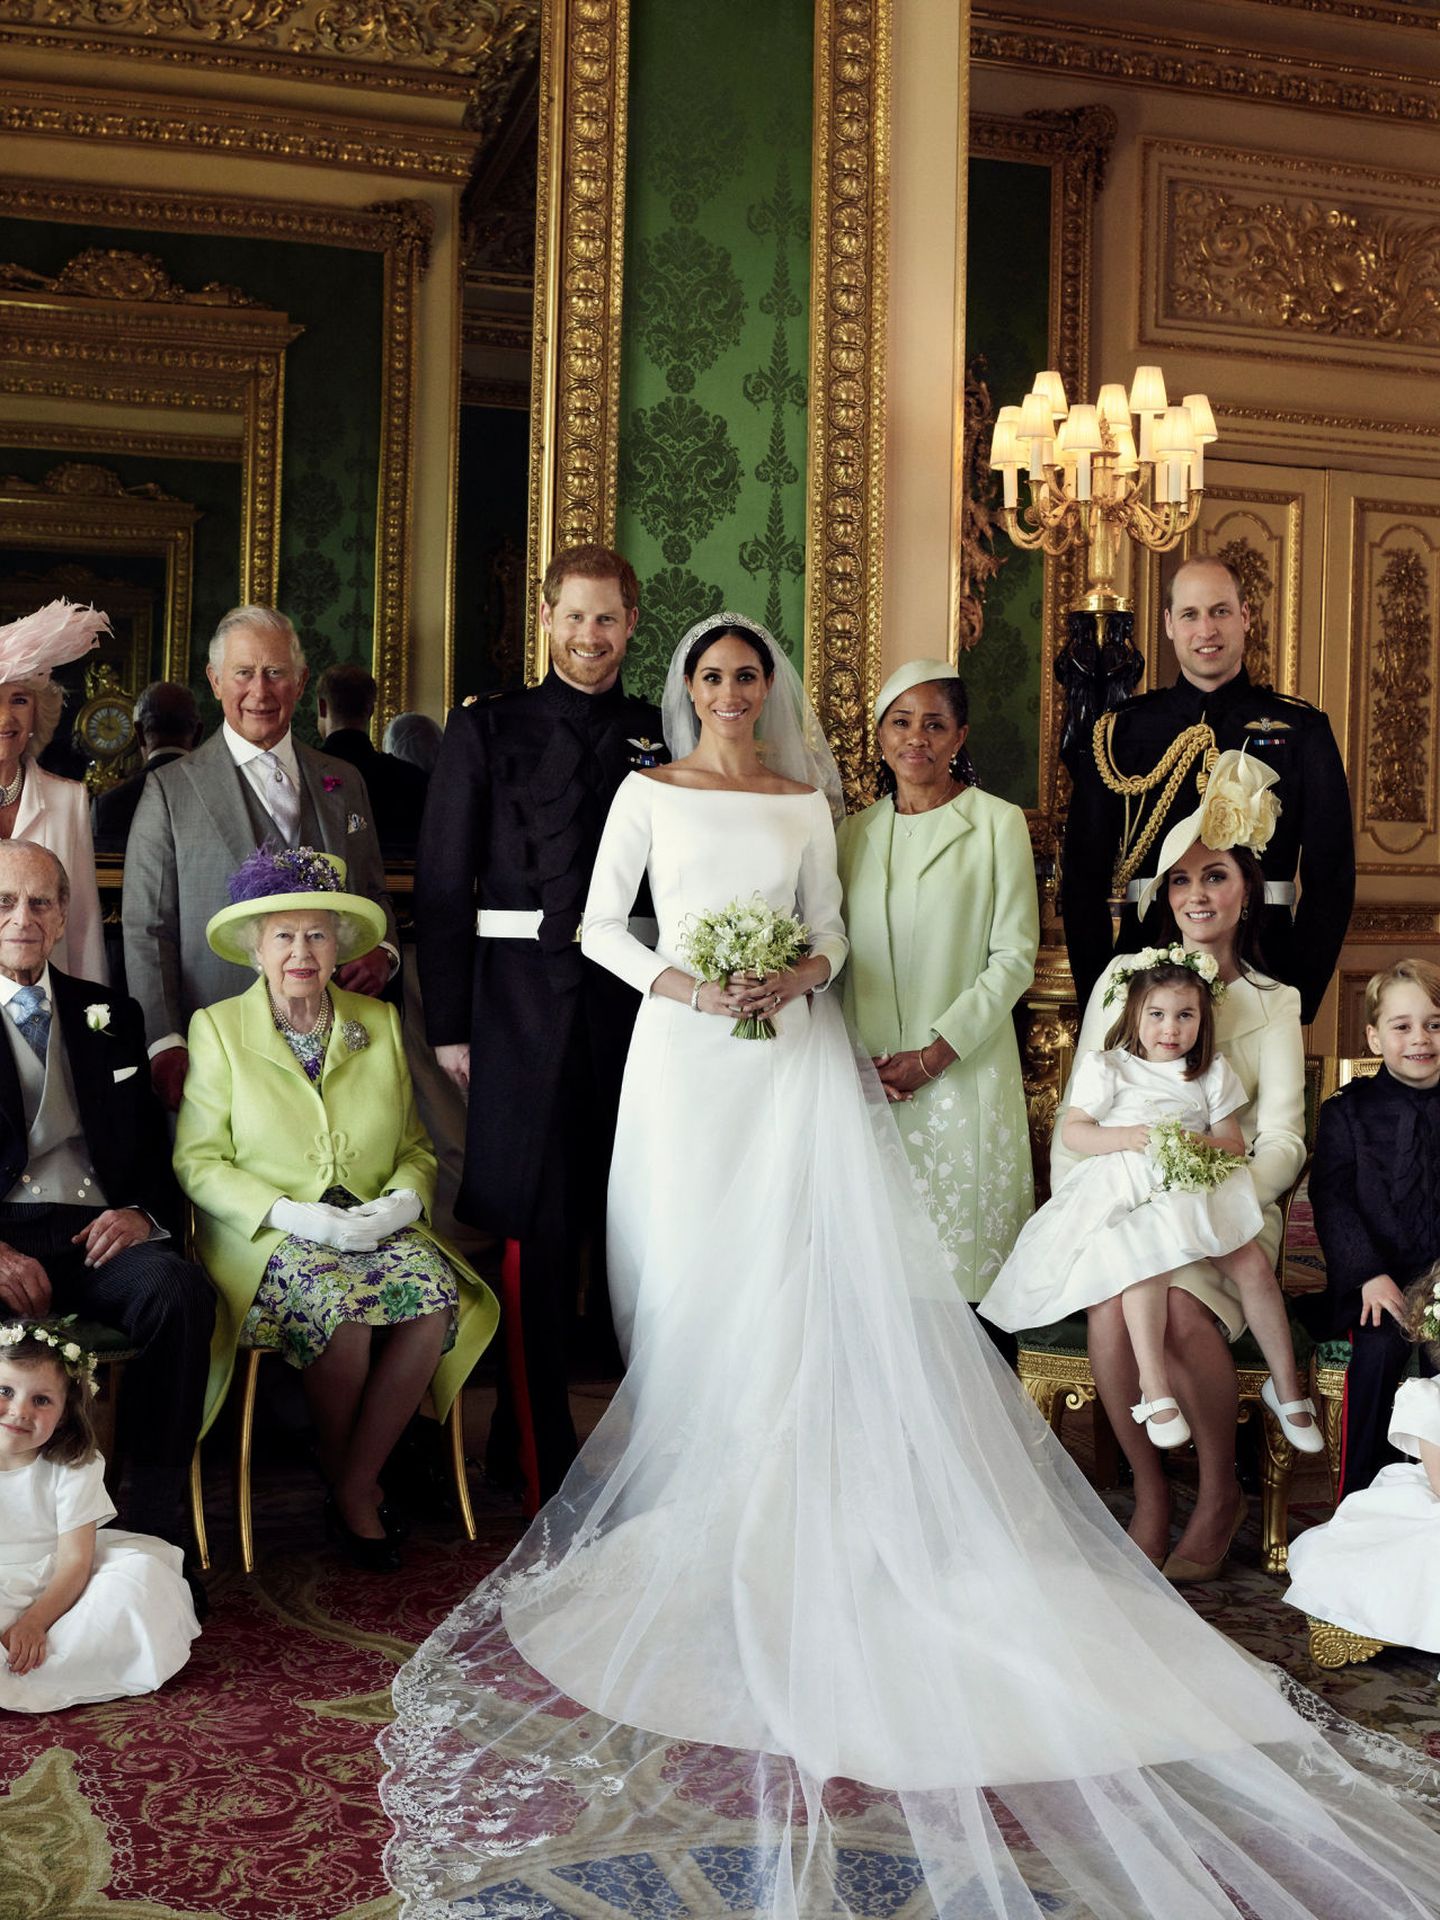 La boda de los duques de Sussex. (Reuters)